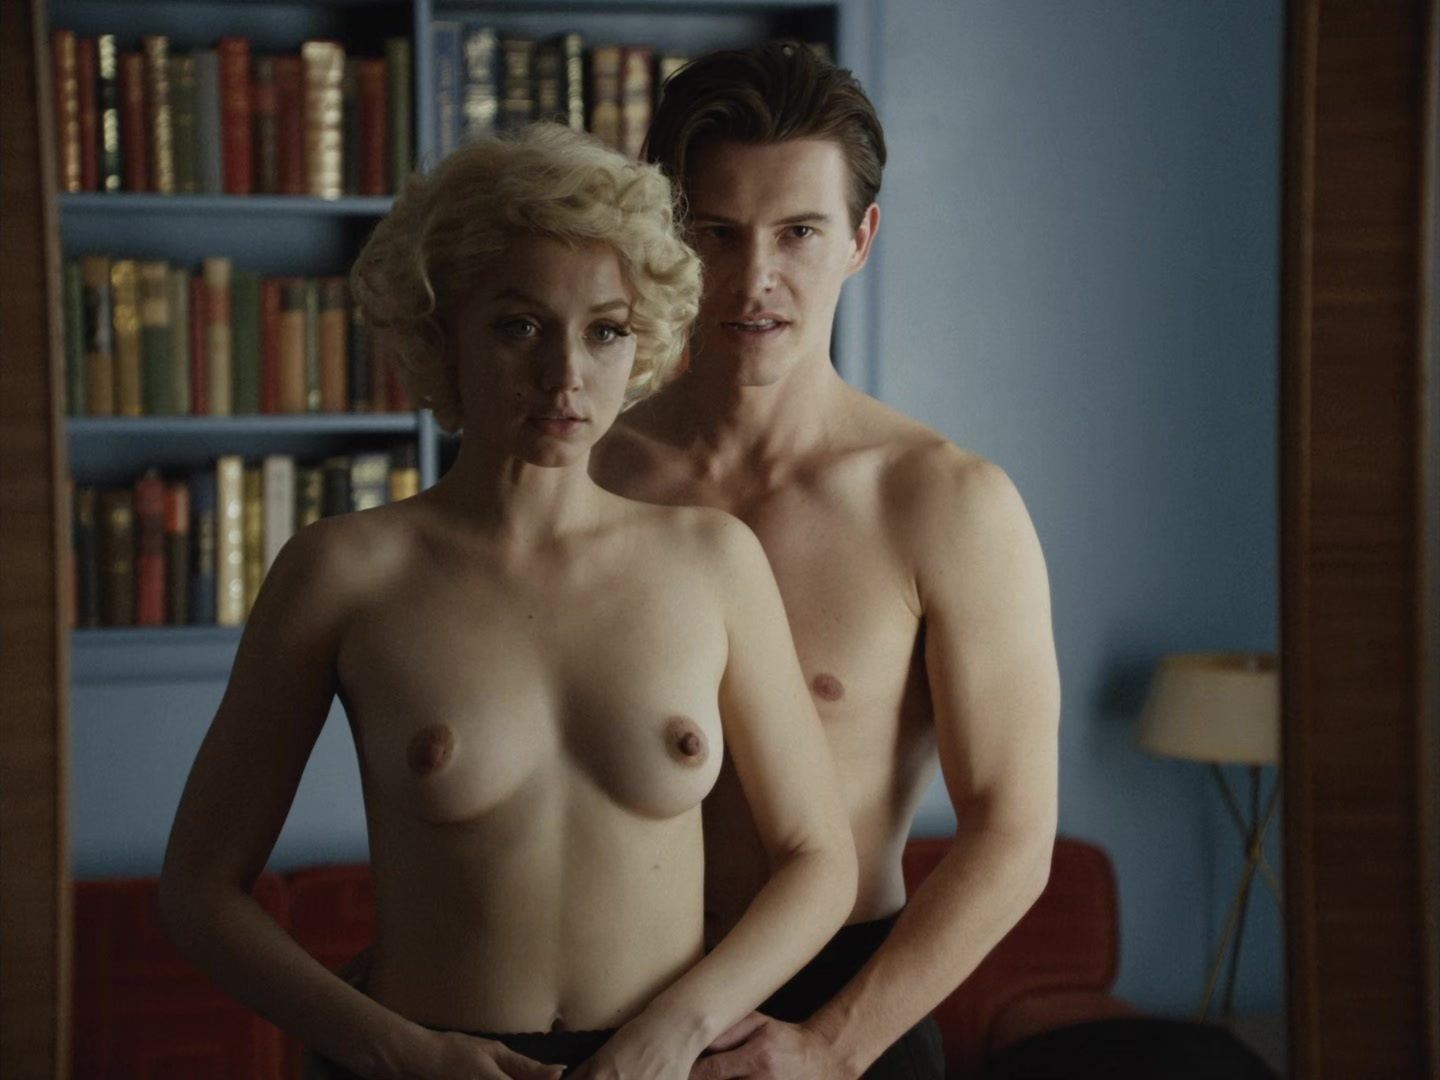 American erotic blondes movies sex scenes